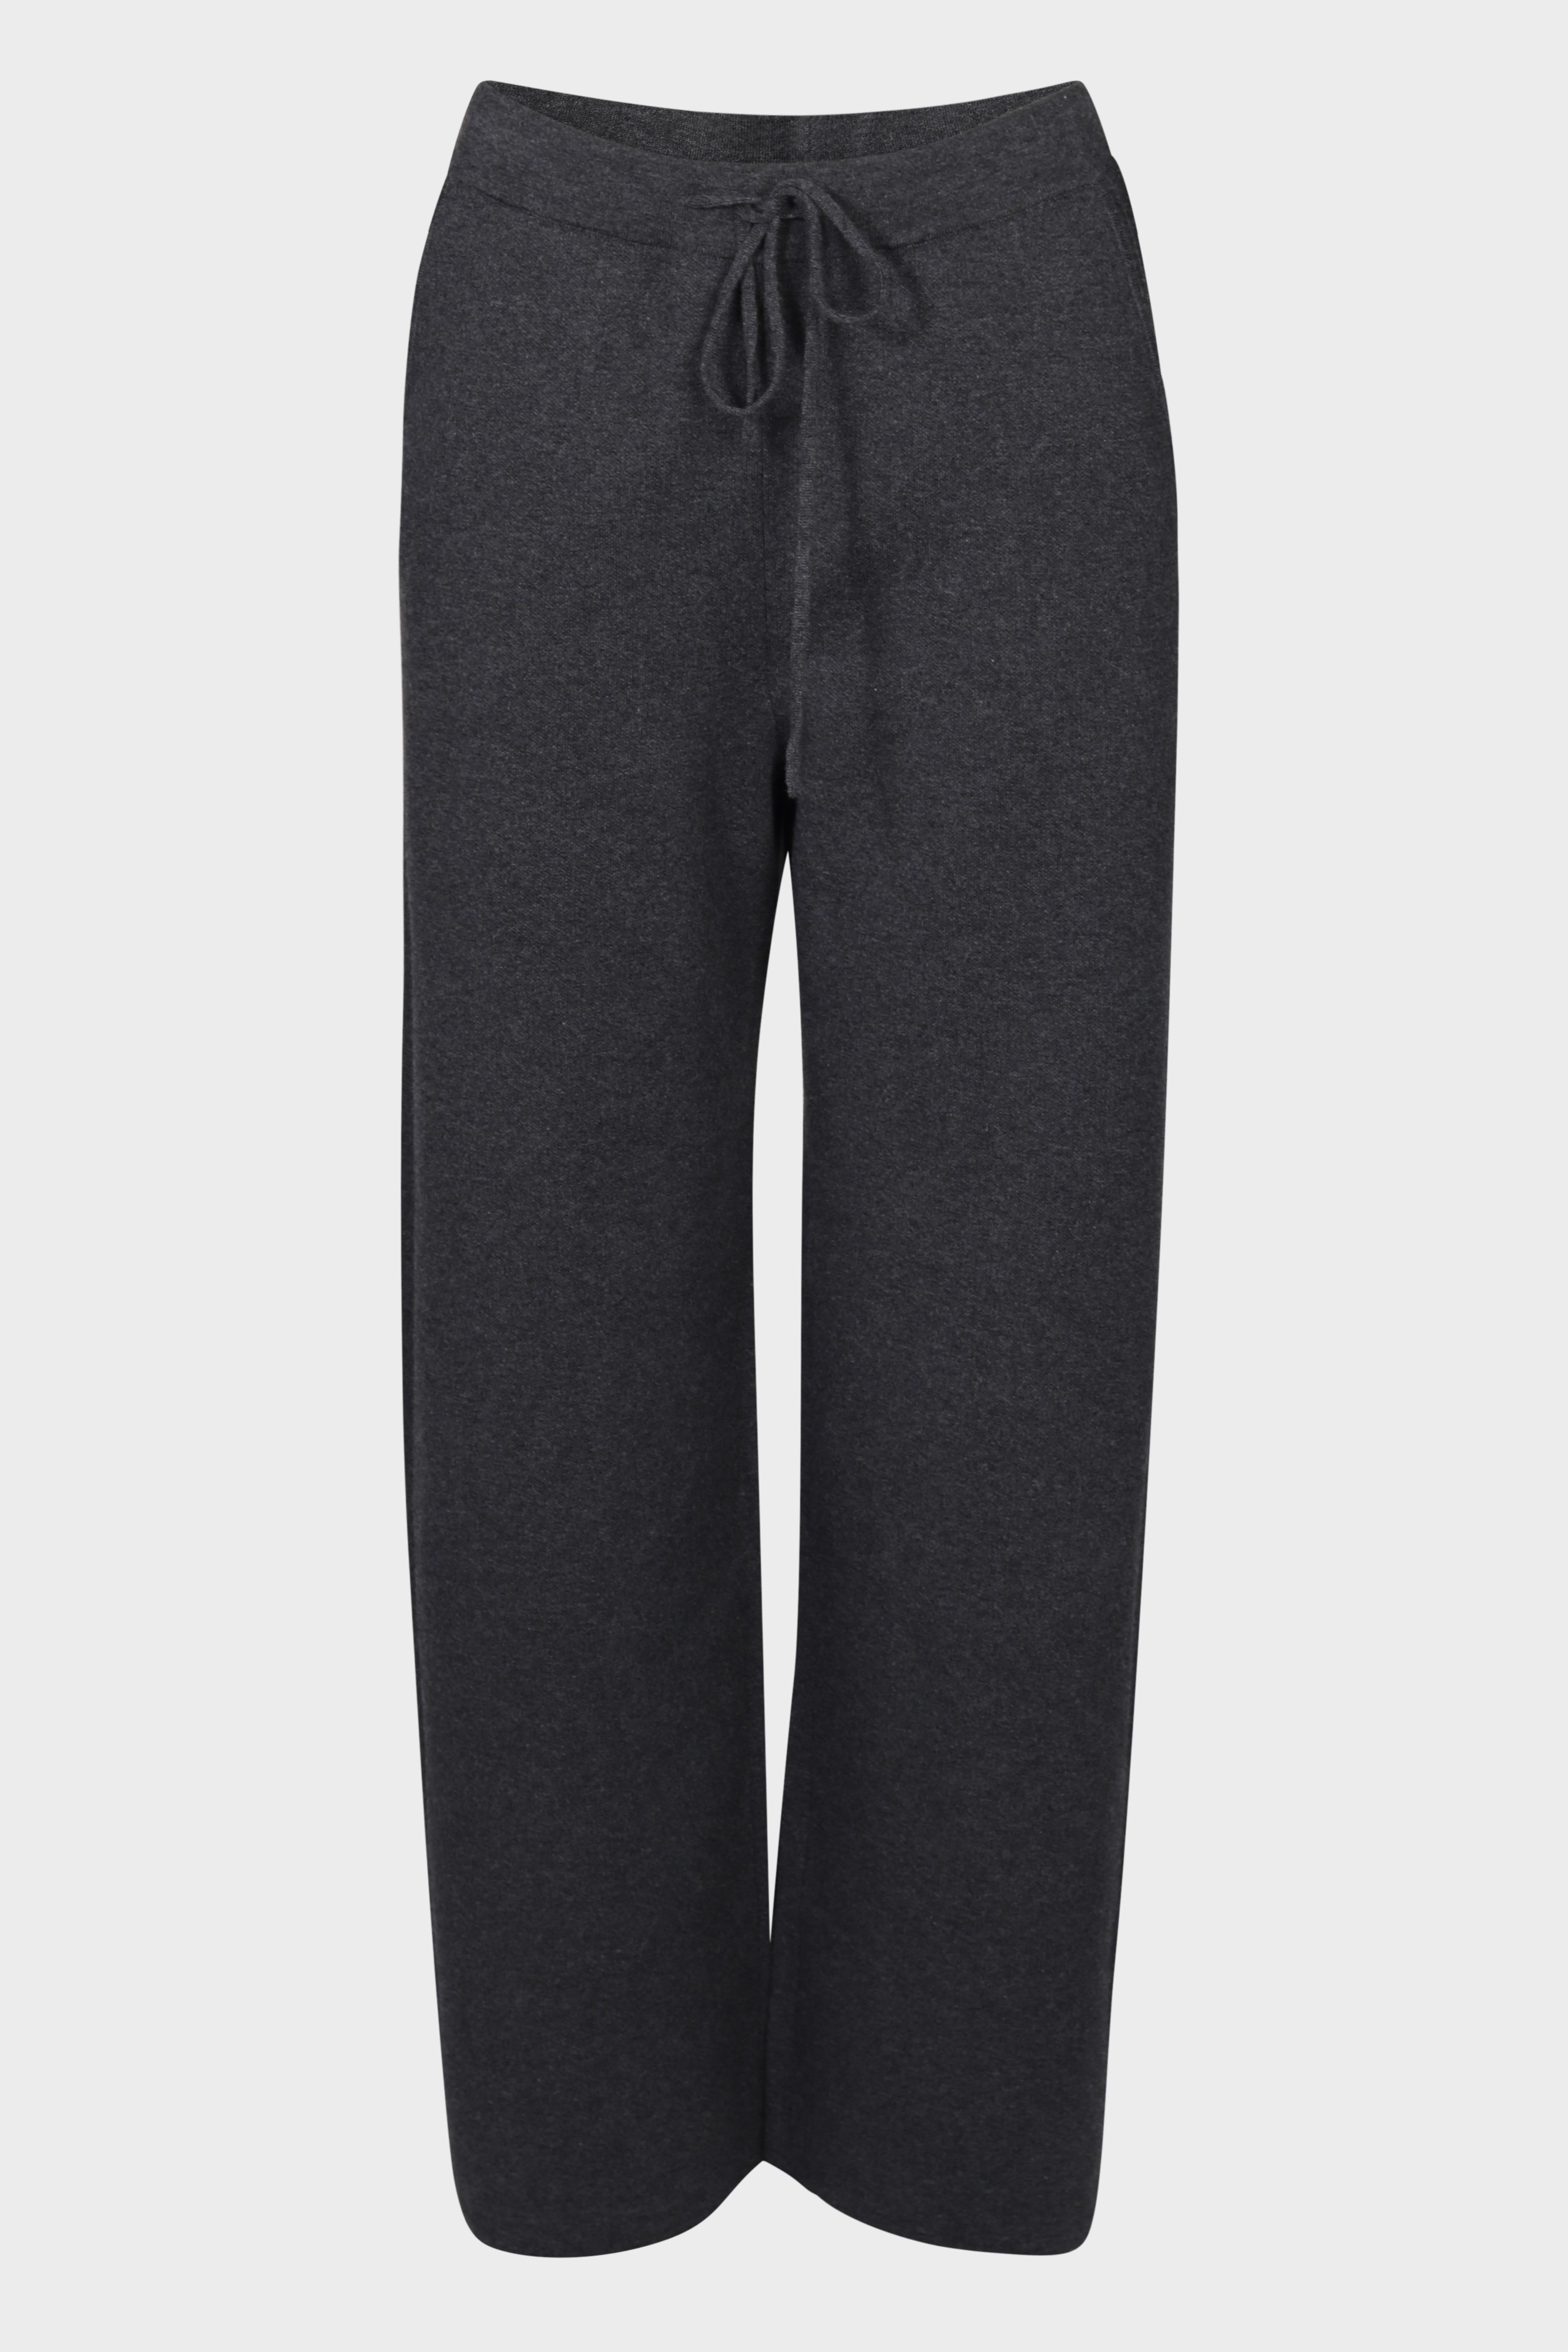 FLONA Cotton/ Cashmere Knit Pant in Dark Grey XS